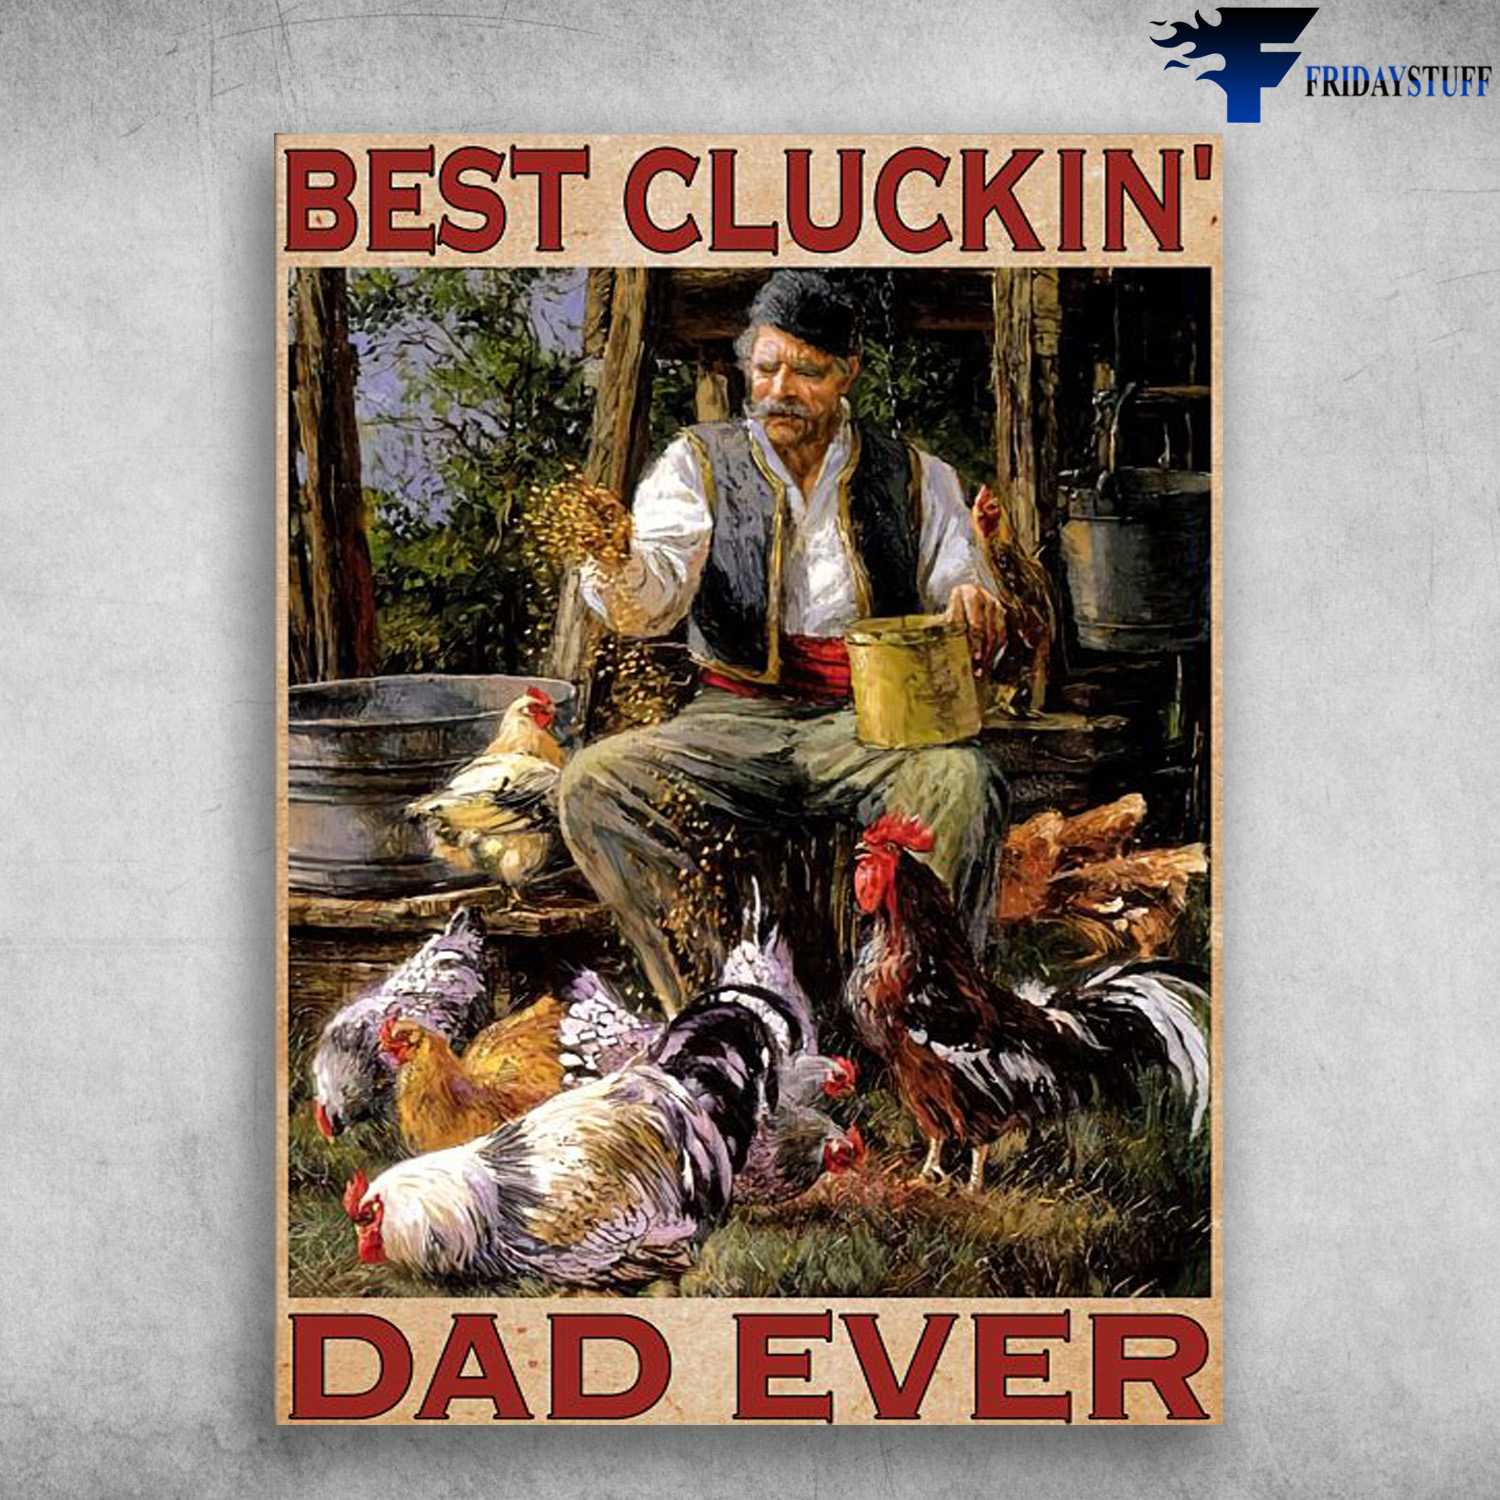 Chicken Poster, Farmer Poster, Best Cluckin', Dad Ever